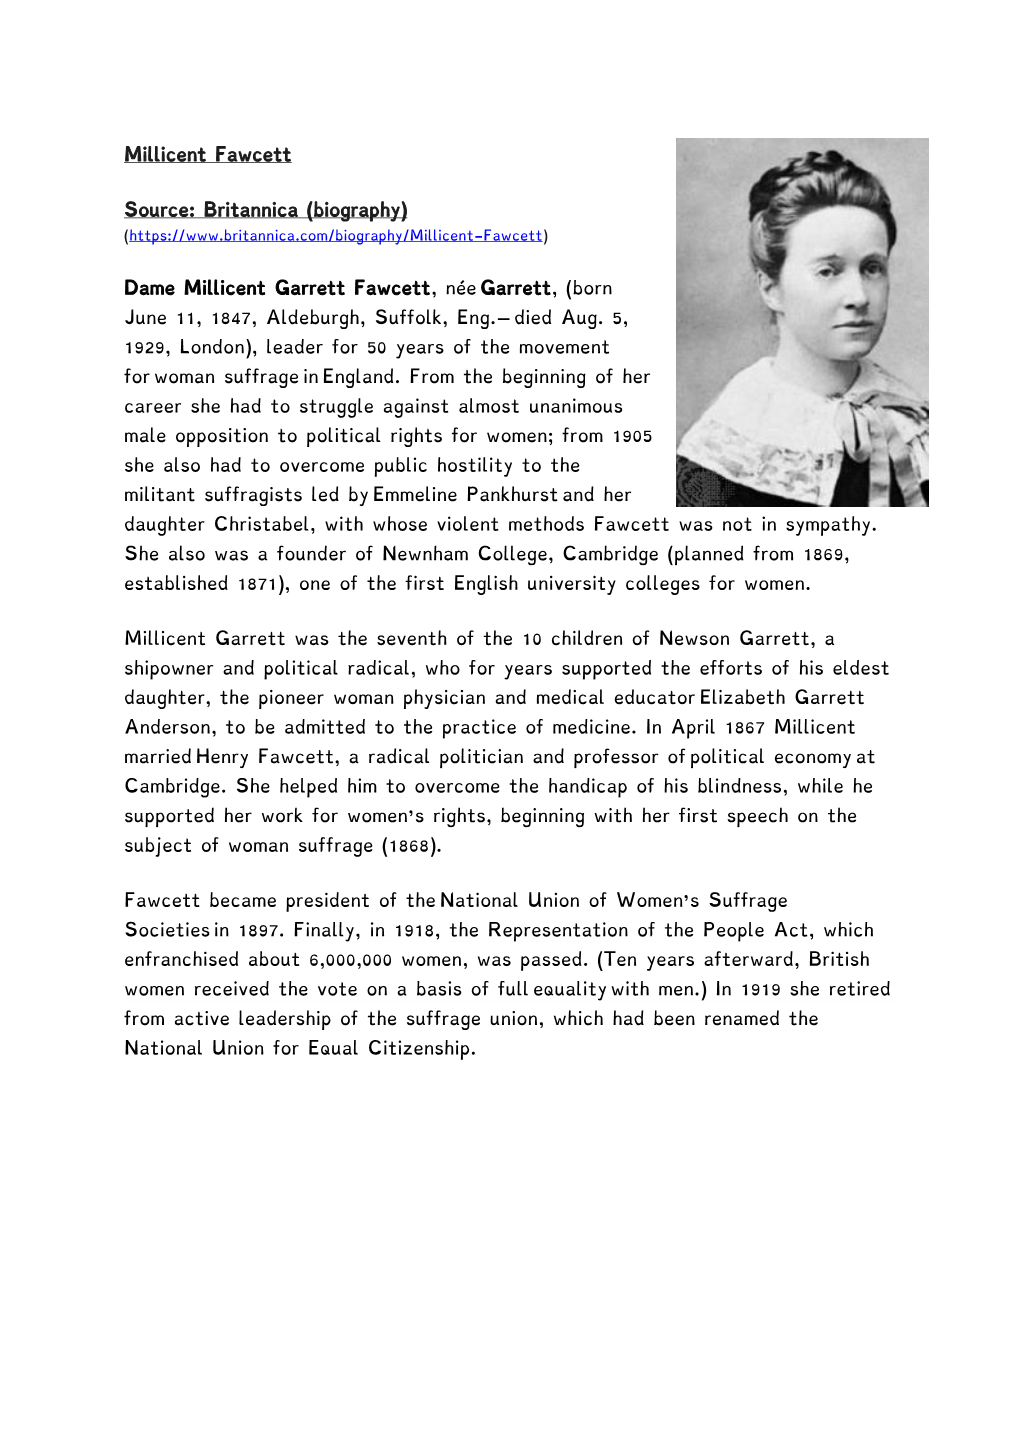 Millicent Fawcett Source: Britannica (Biography) Dame Millicent Garrett